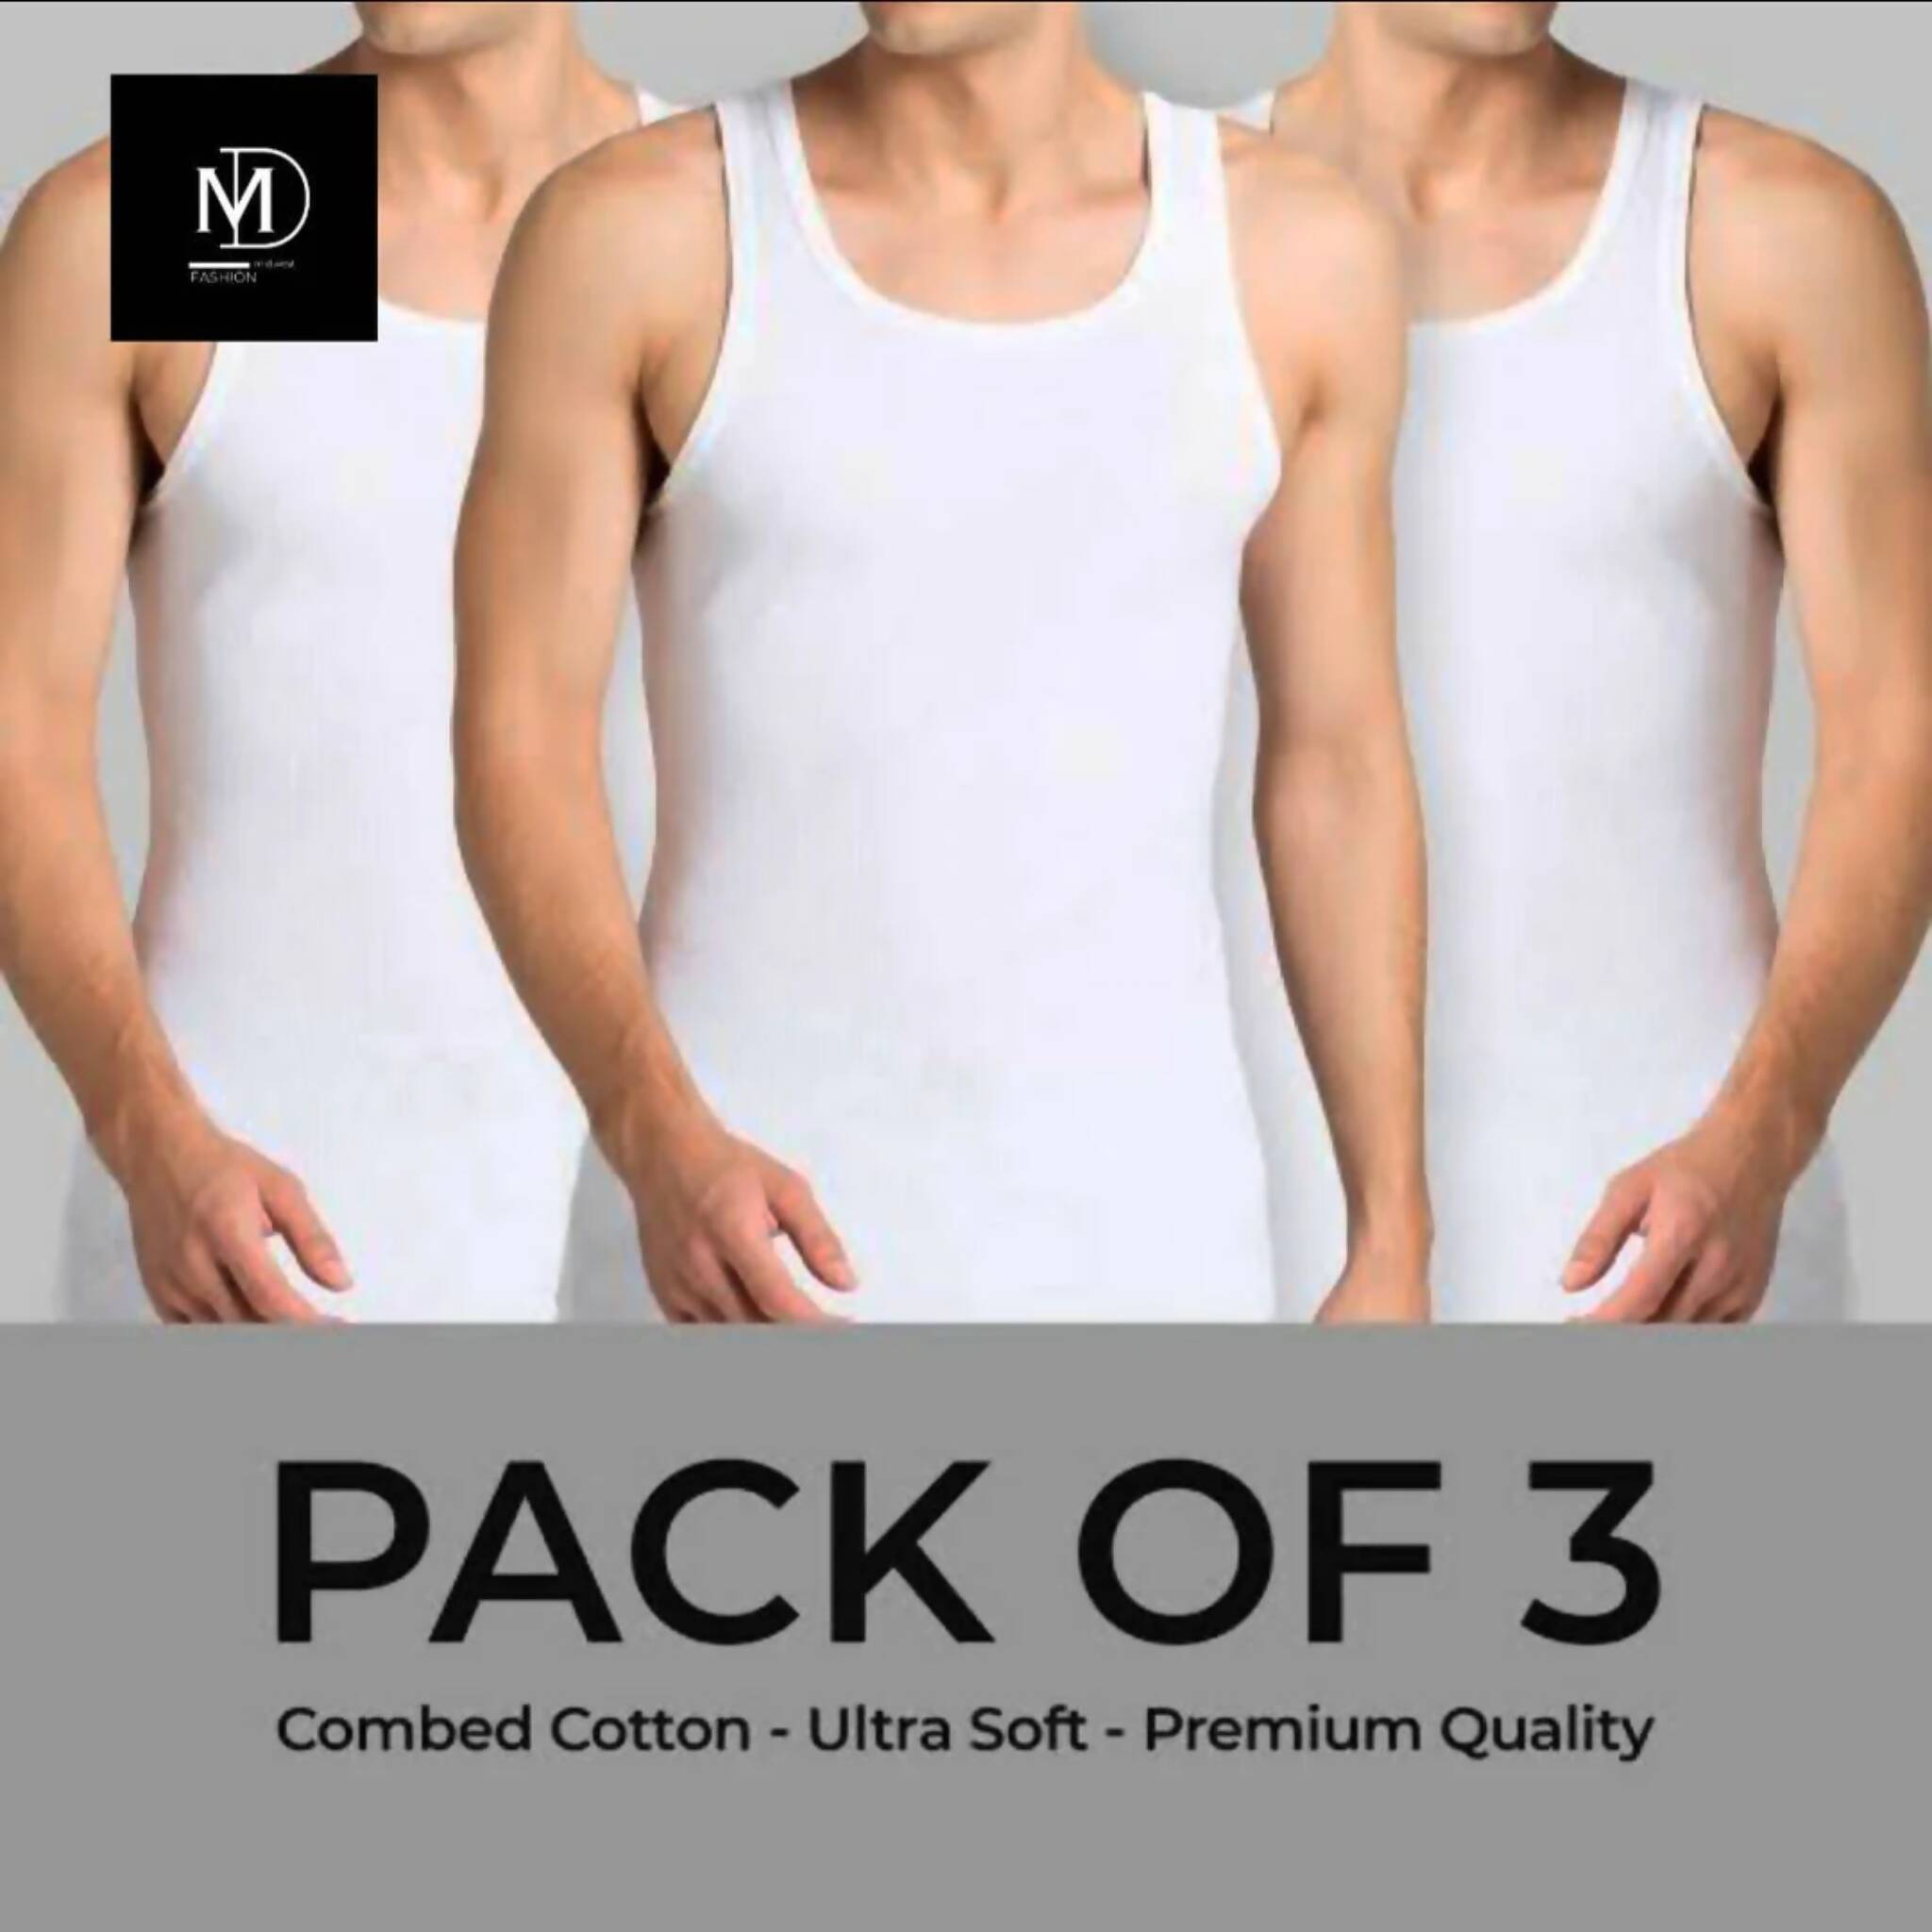 Vests, Versatile, Free Size & Fashionable Wardrobe Essential, for Men